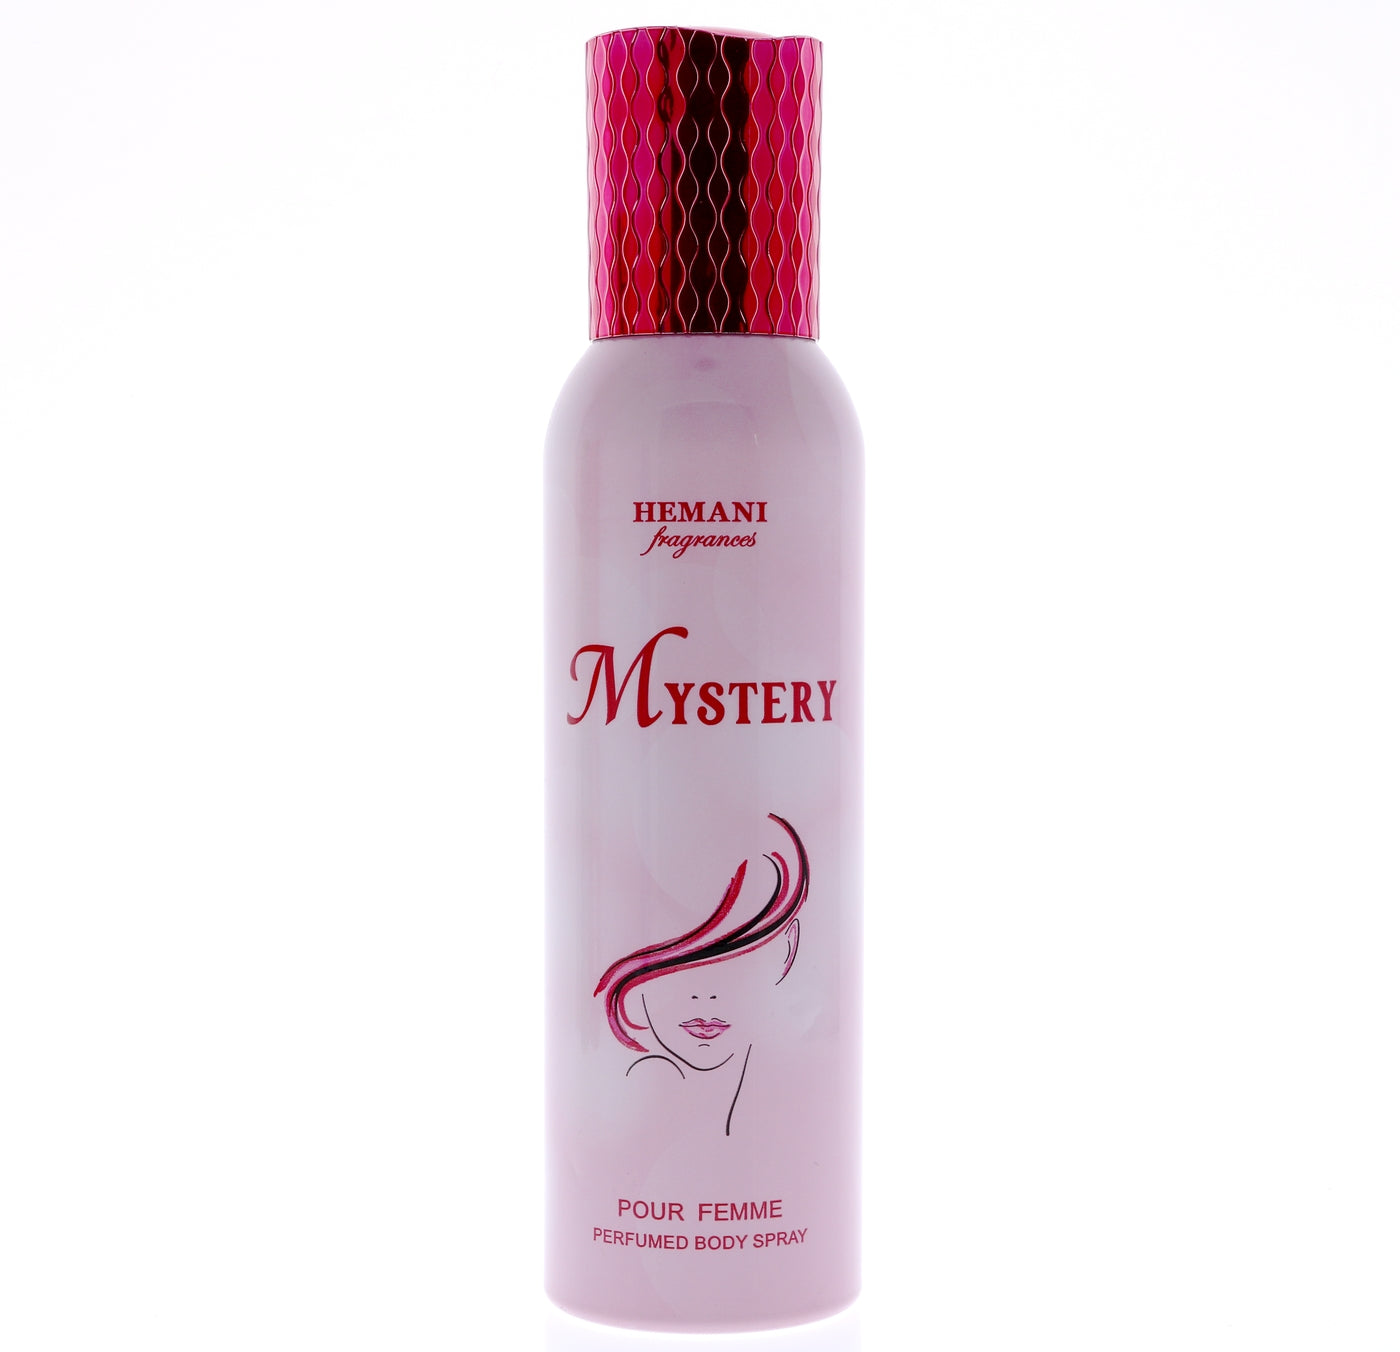 hemani-mystery-deodorant-spray-200ml-7-oz-for-women-1